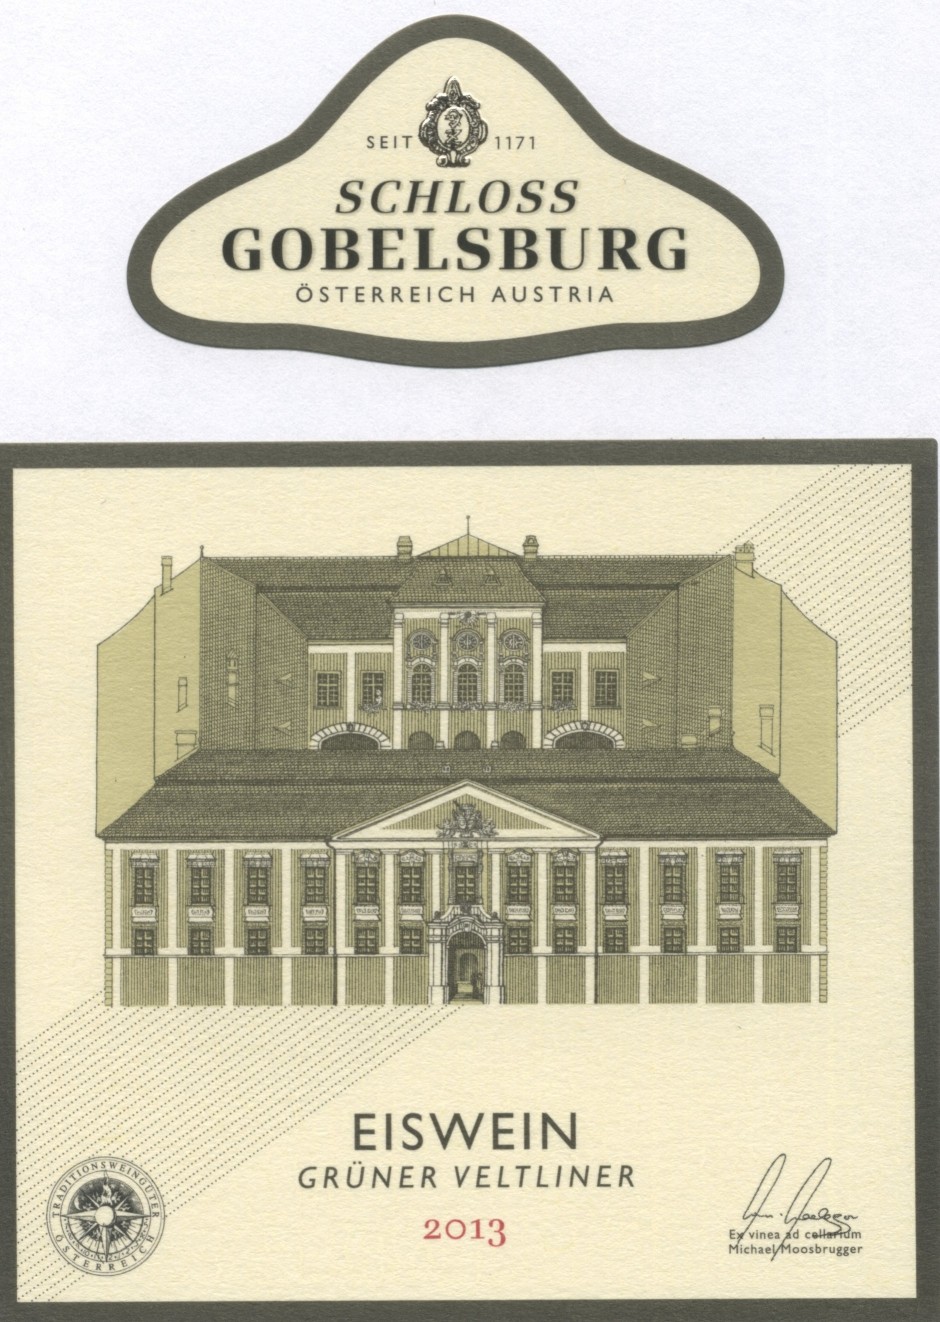 Schloss Gobelsburg, Gruner Veltliner, Eiswein | Шлосс Гобельсбург, Грюнер Вельтлинер, Айсвайн